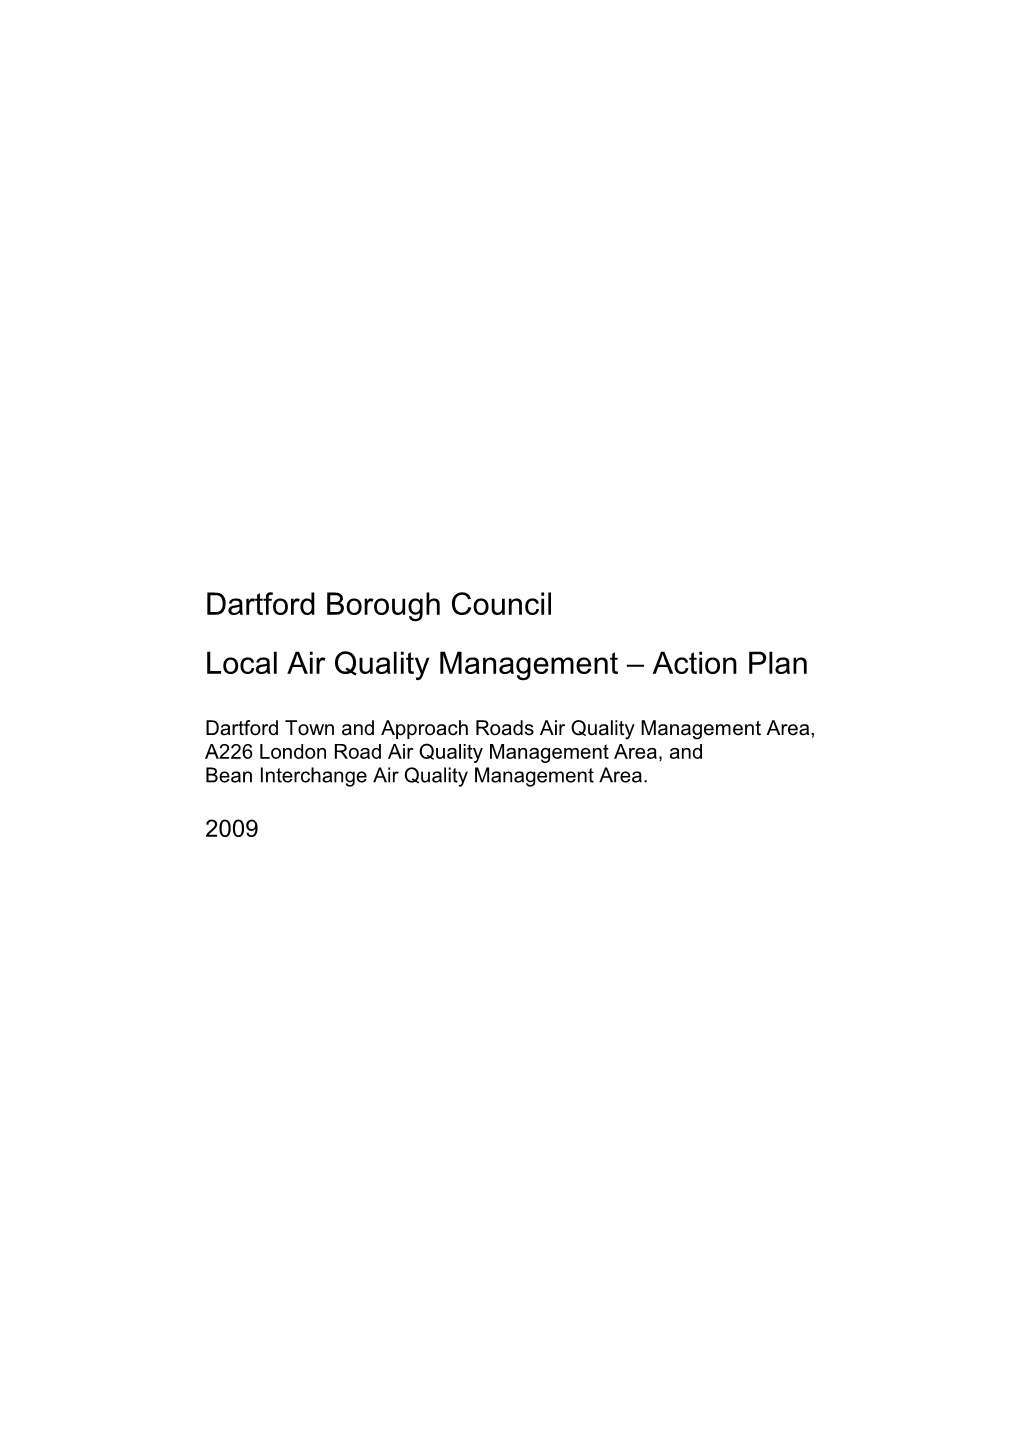 Dartford Borough Council Local Air Quality Management – Action Plan